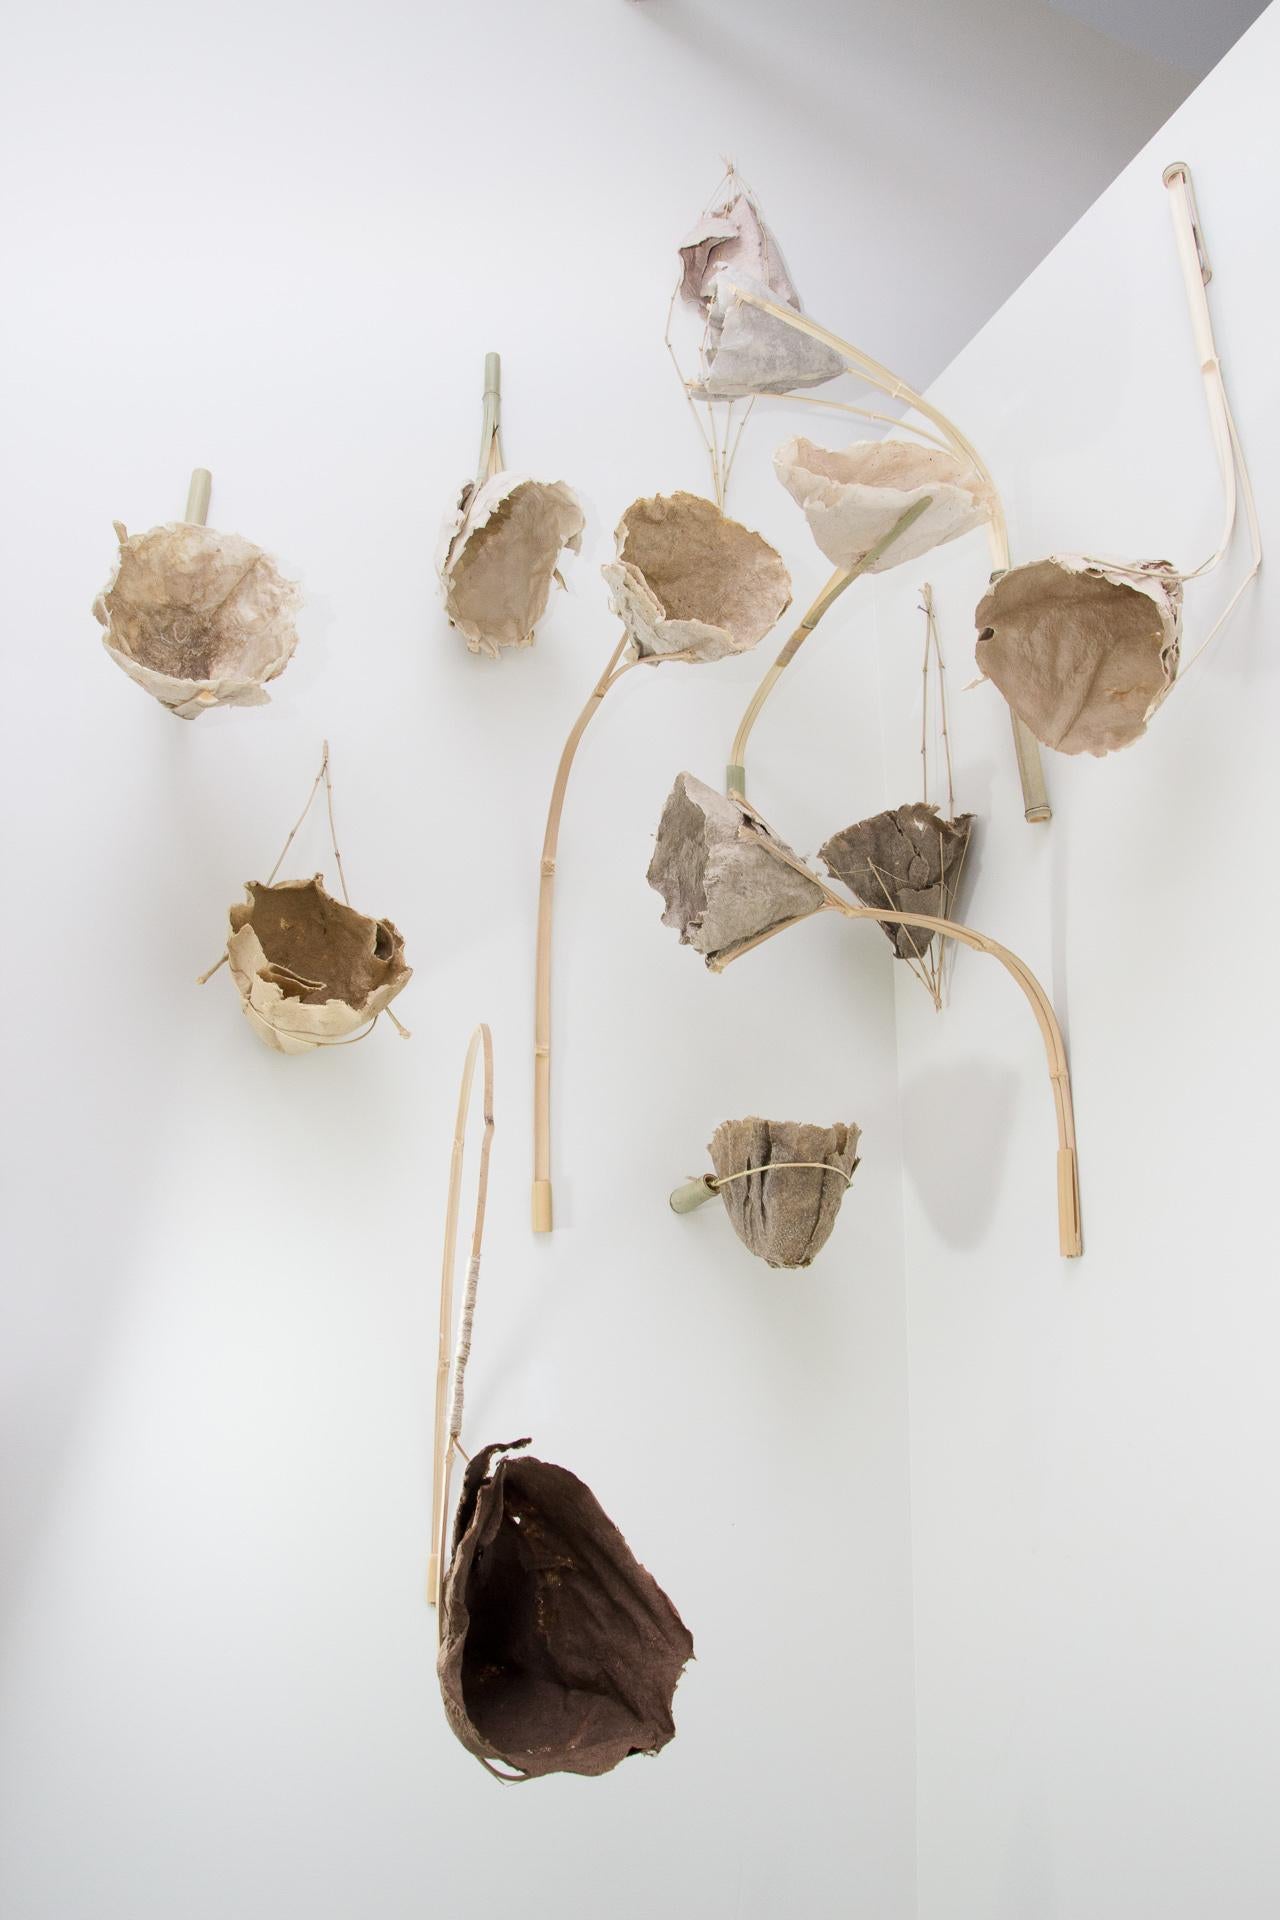 Michel Michele Brody, Re-Blooms, Installation, Handgegossenes Papier, Bambus, 8' H x 5' B x 3' T